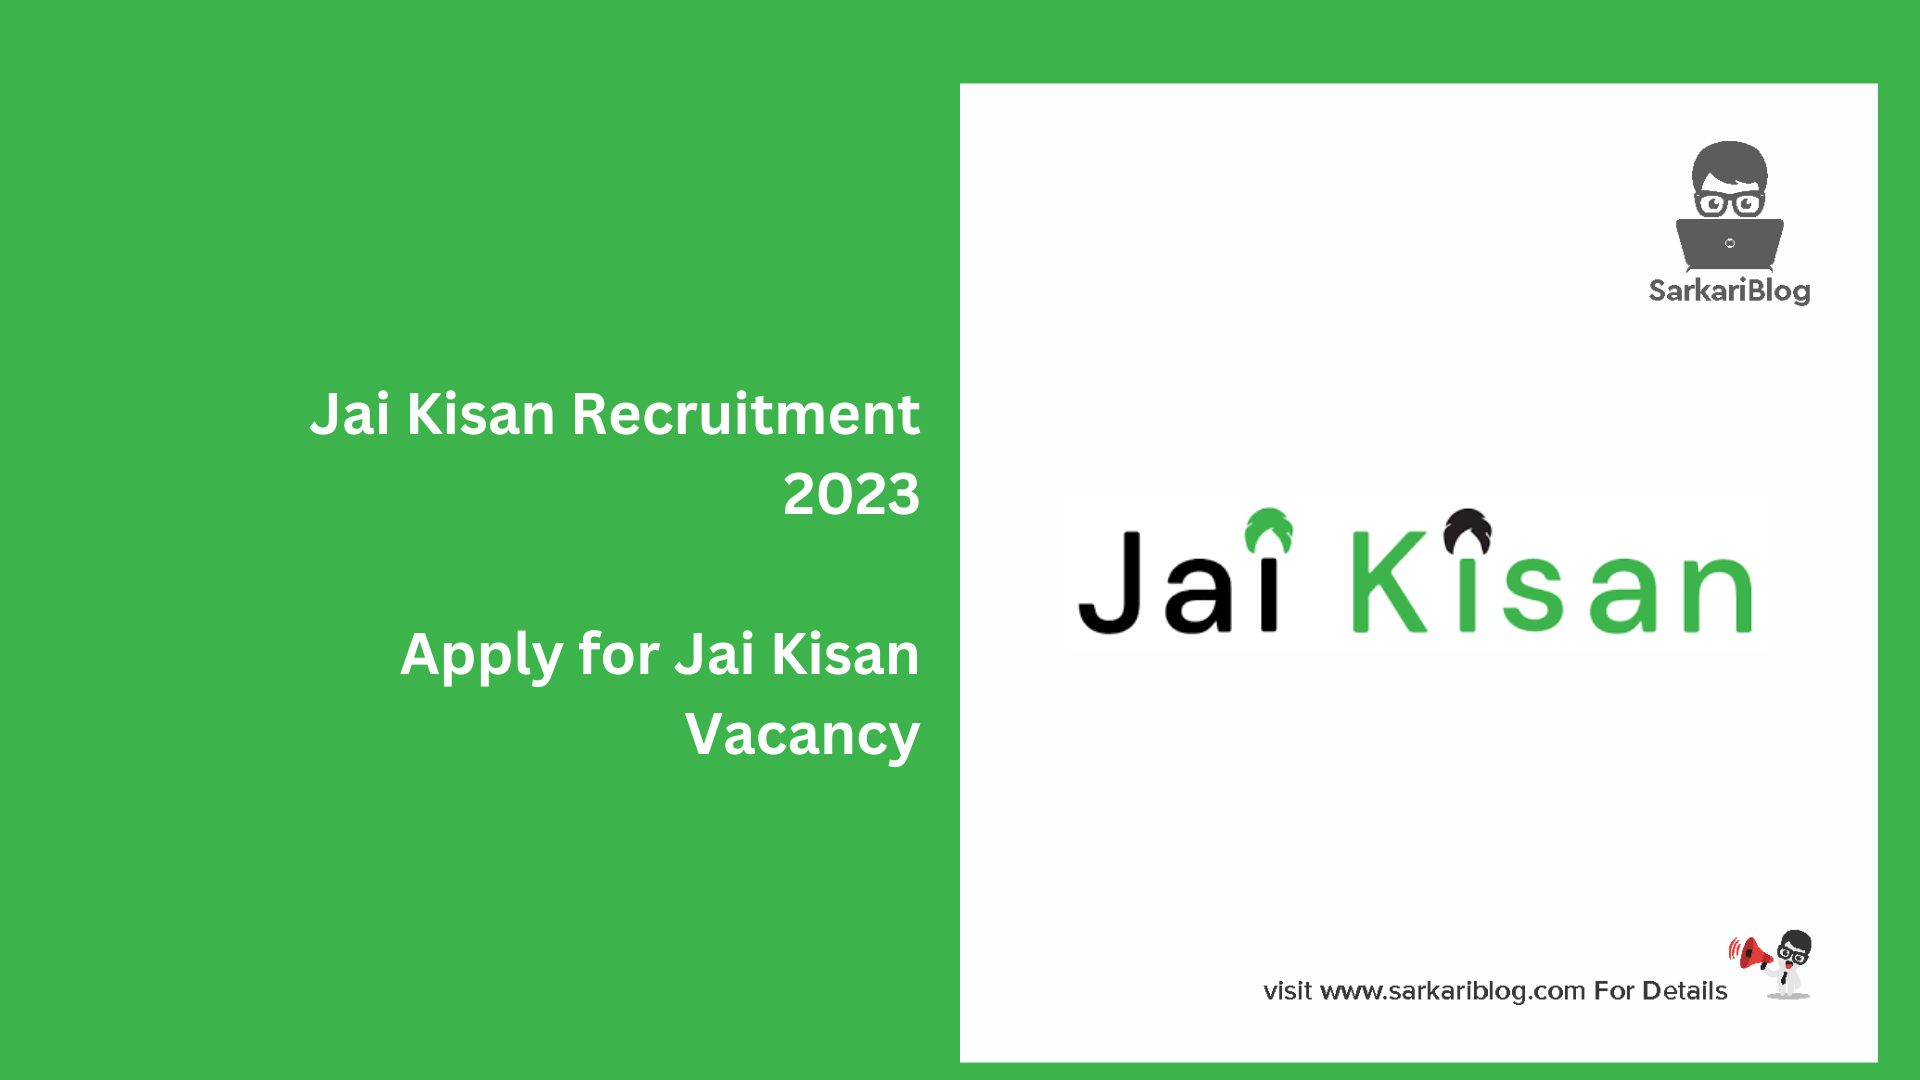 Jai Kisan Recruitment 2023